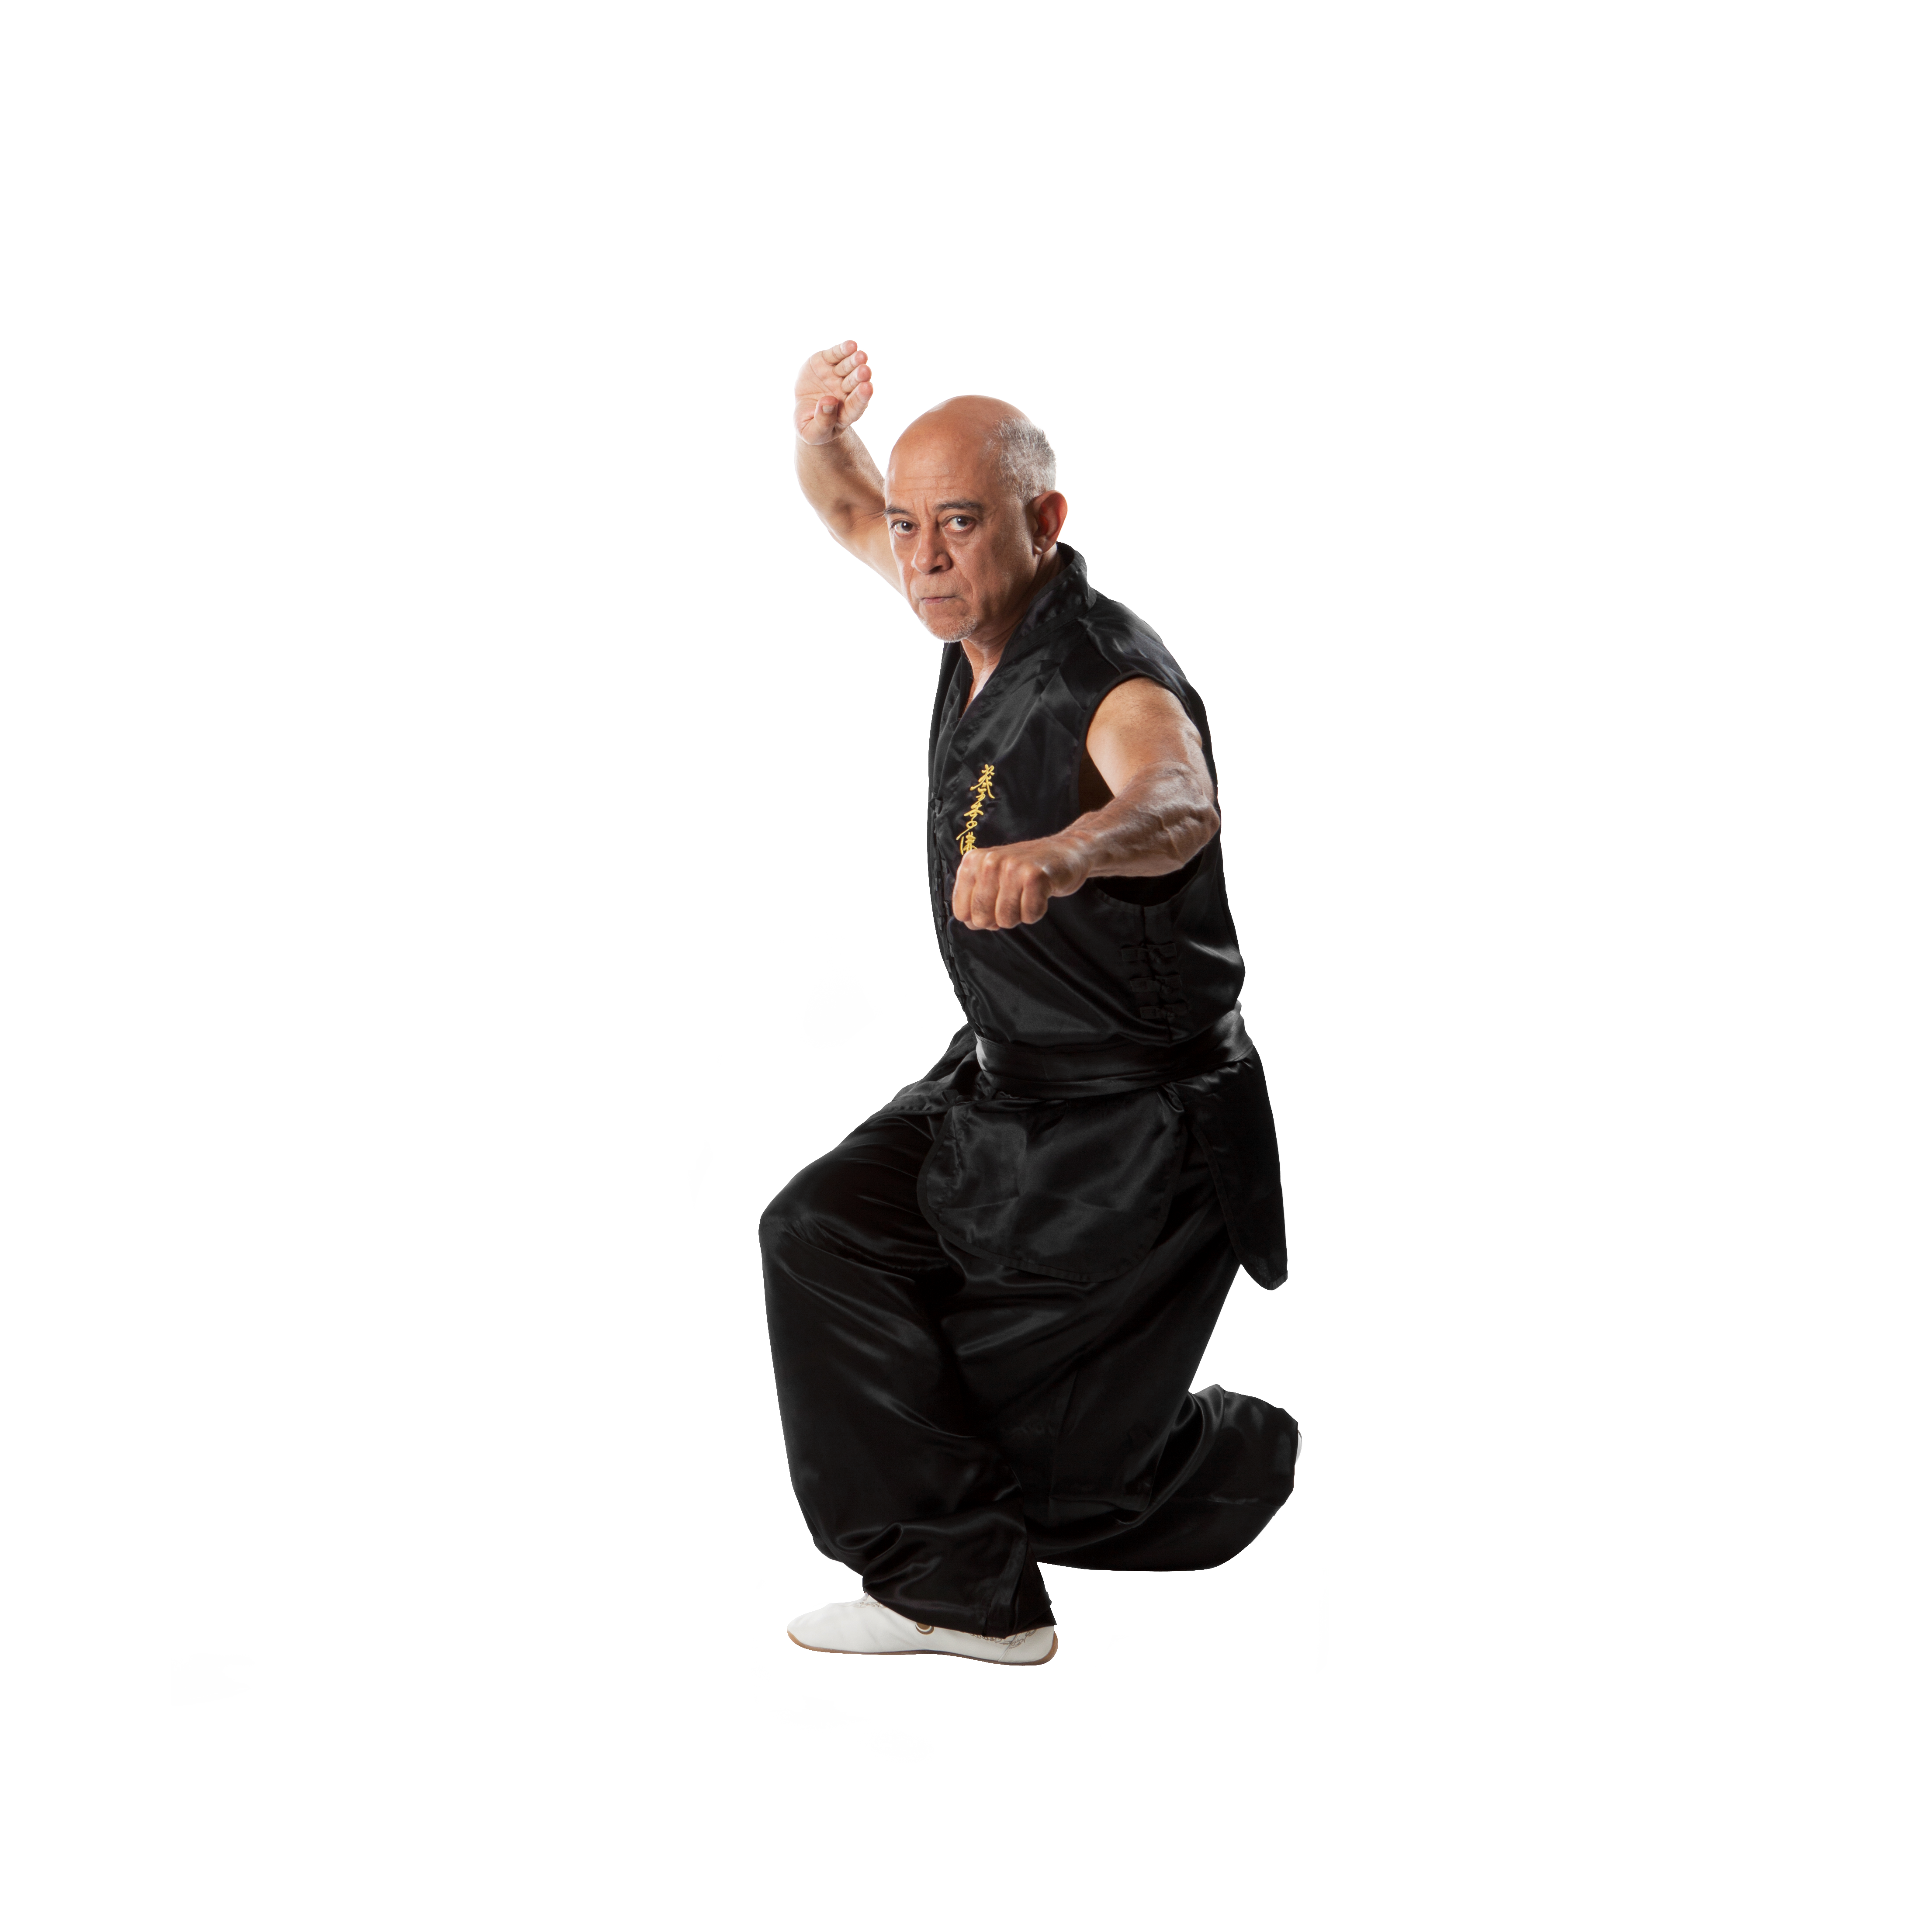 1 O Grande Mestre - Ving Tsun Kung Fu Brooklin São Paulo